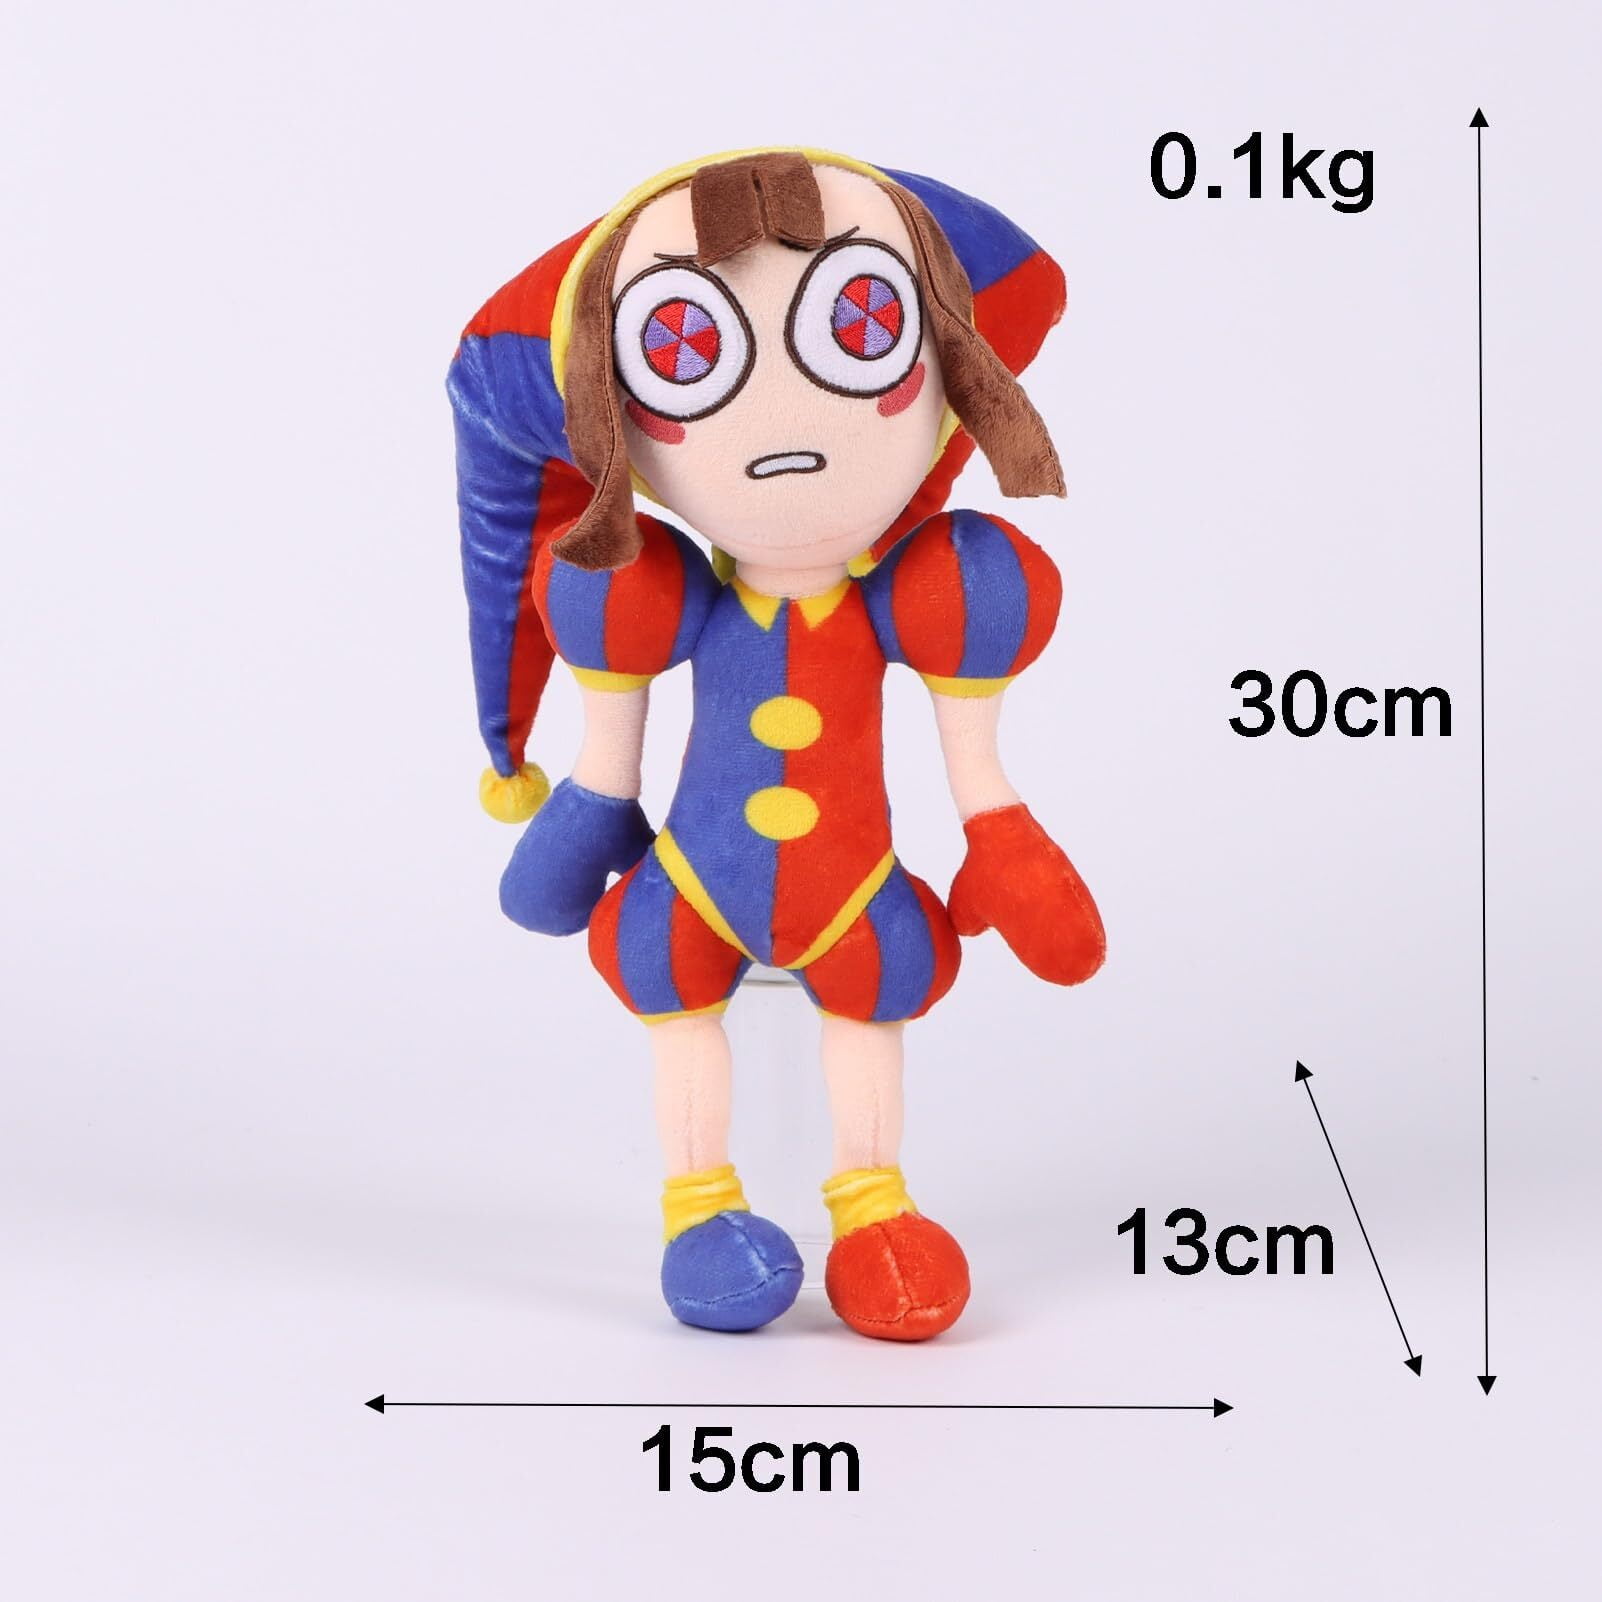 The Amazing Digital Circus Plush Toys, Pomni&Jax Plushies Toy for